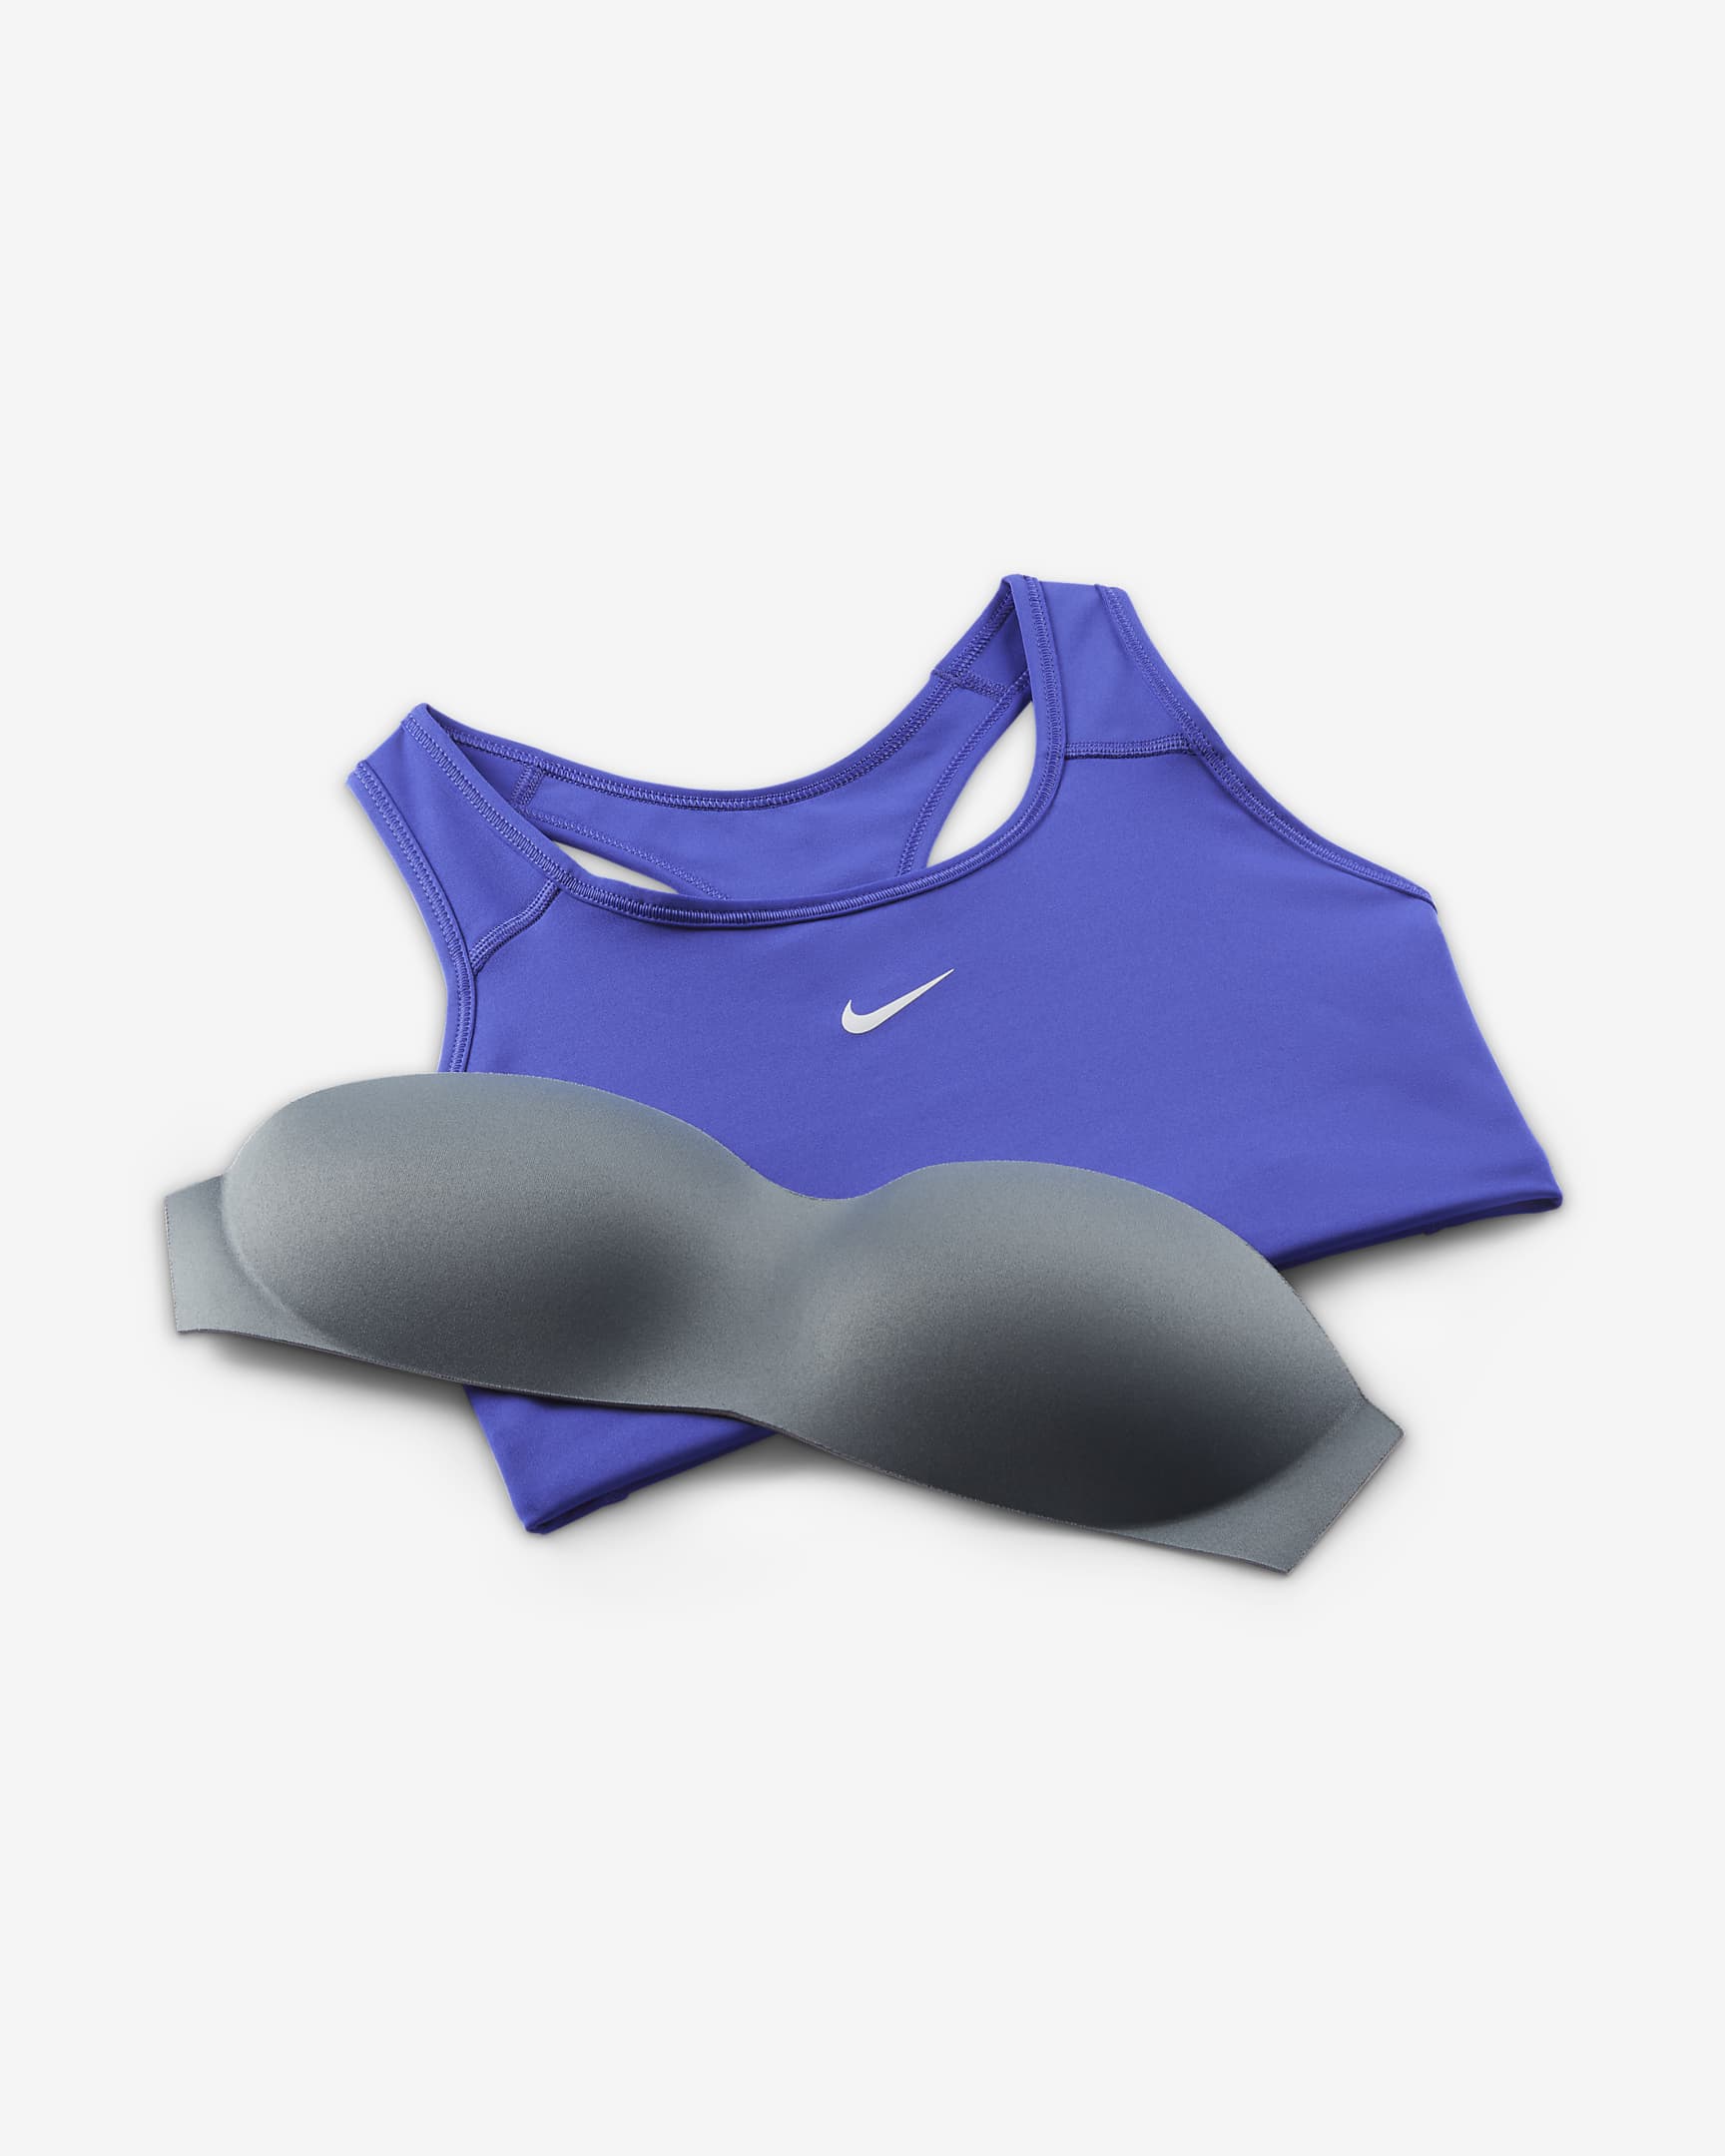 Combinaison coupe-corps femme bleu Nike Air Sportswear taille S NEUVE  AR3171 458 